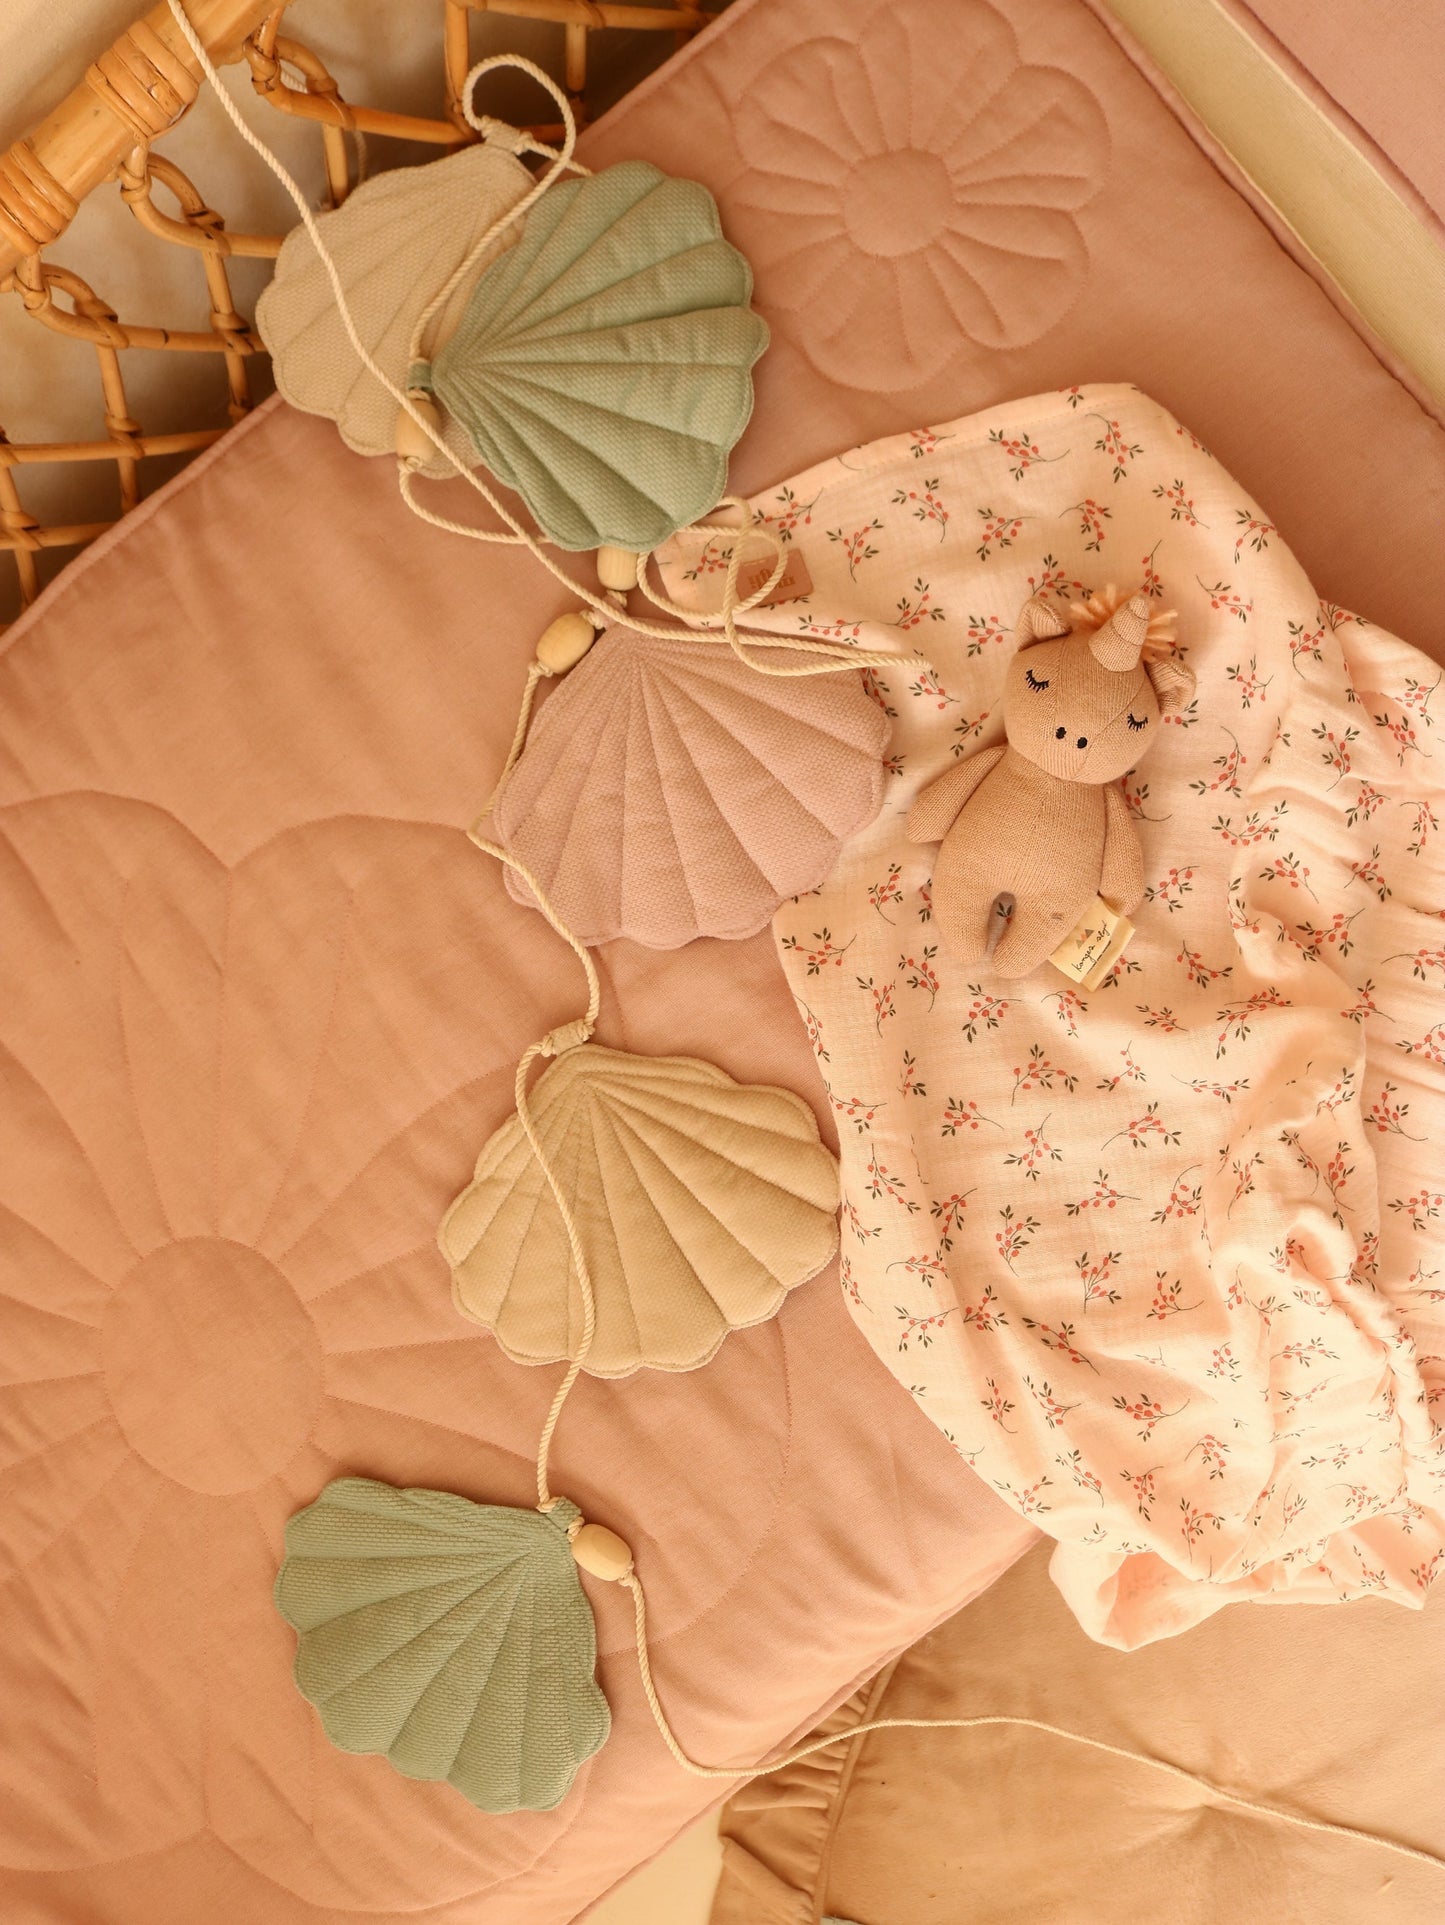 Linen "Powder Pink" Flower Child Cover Set